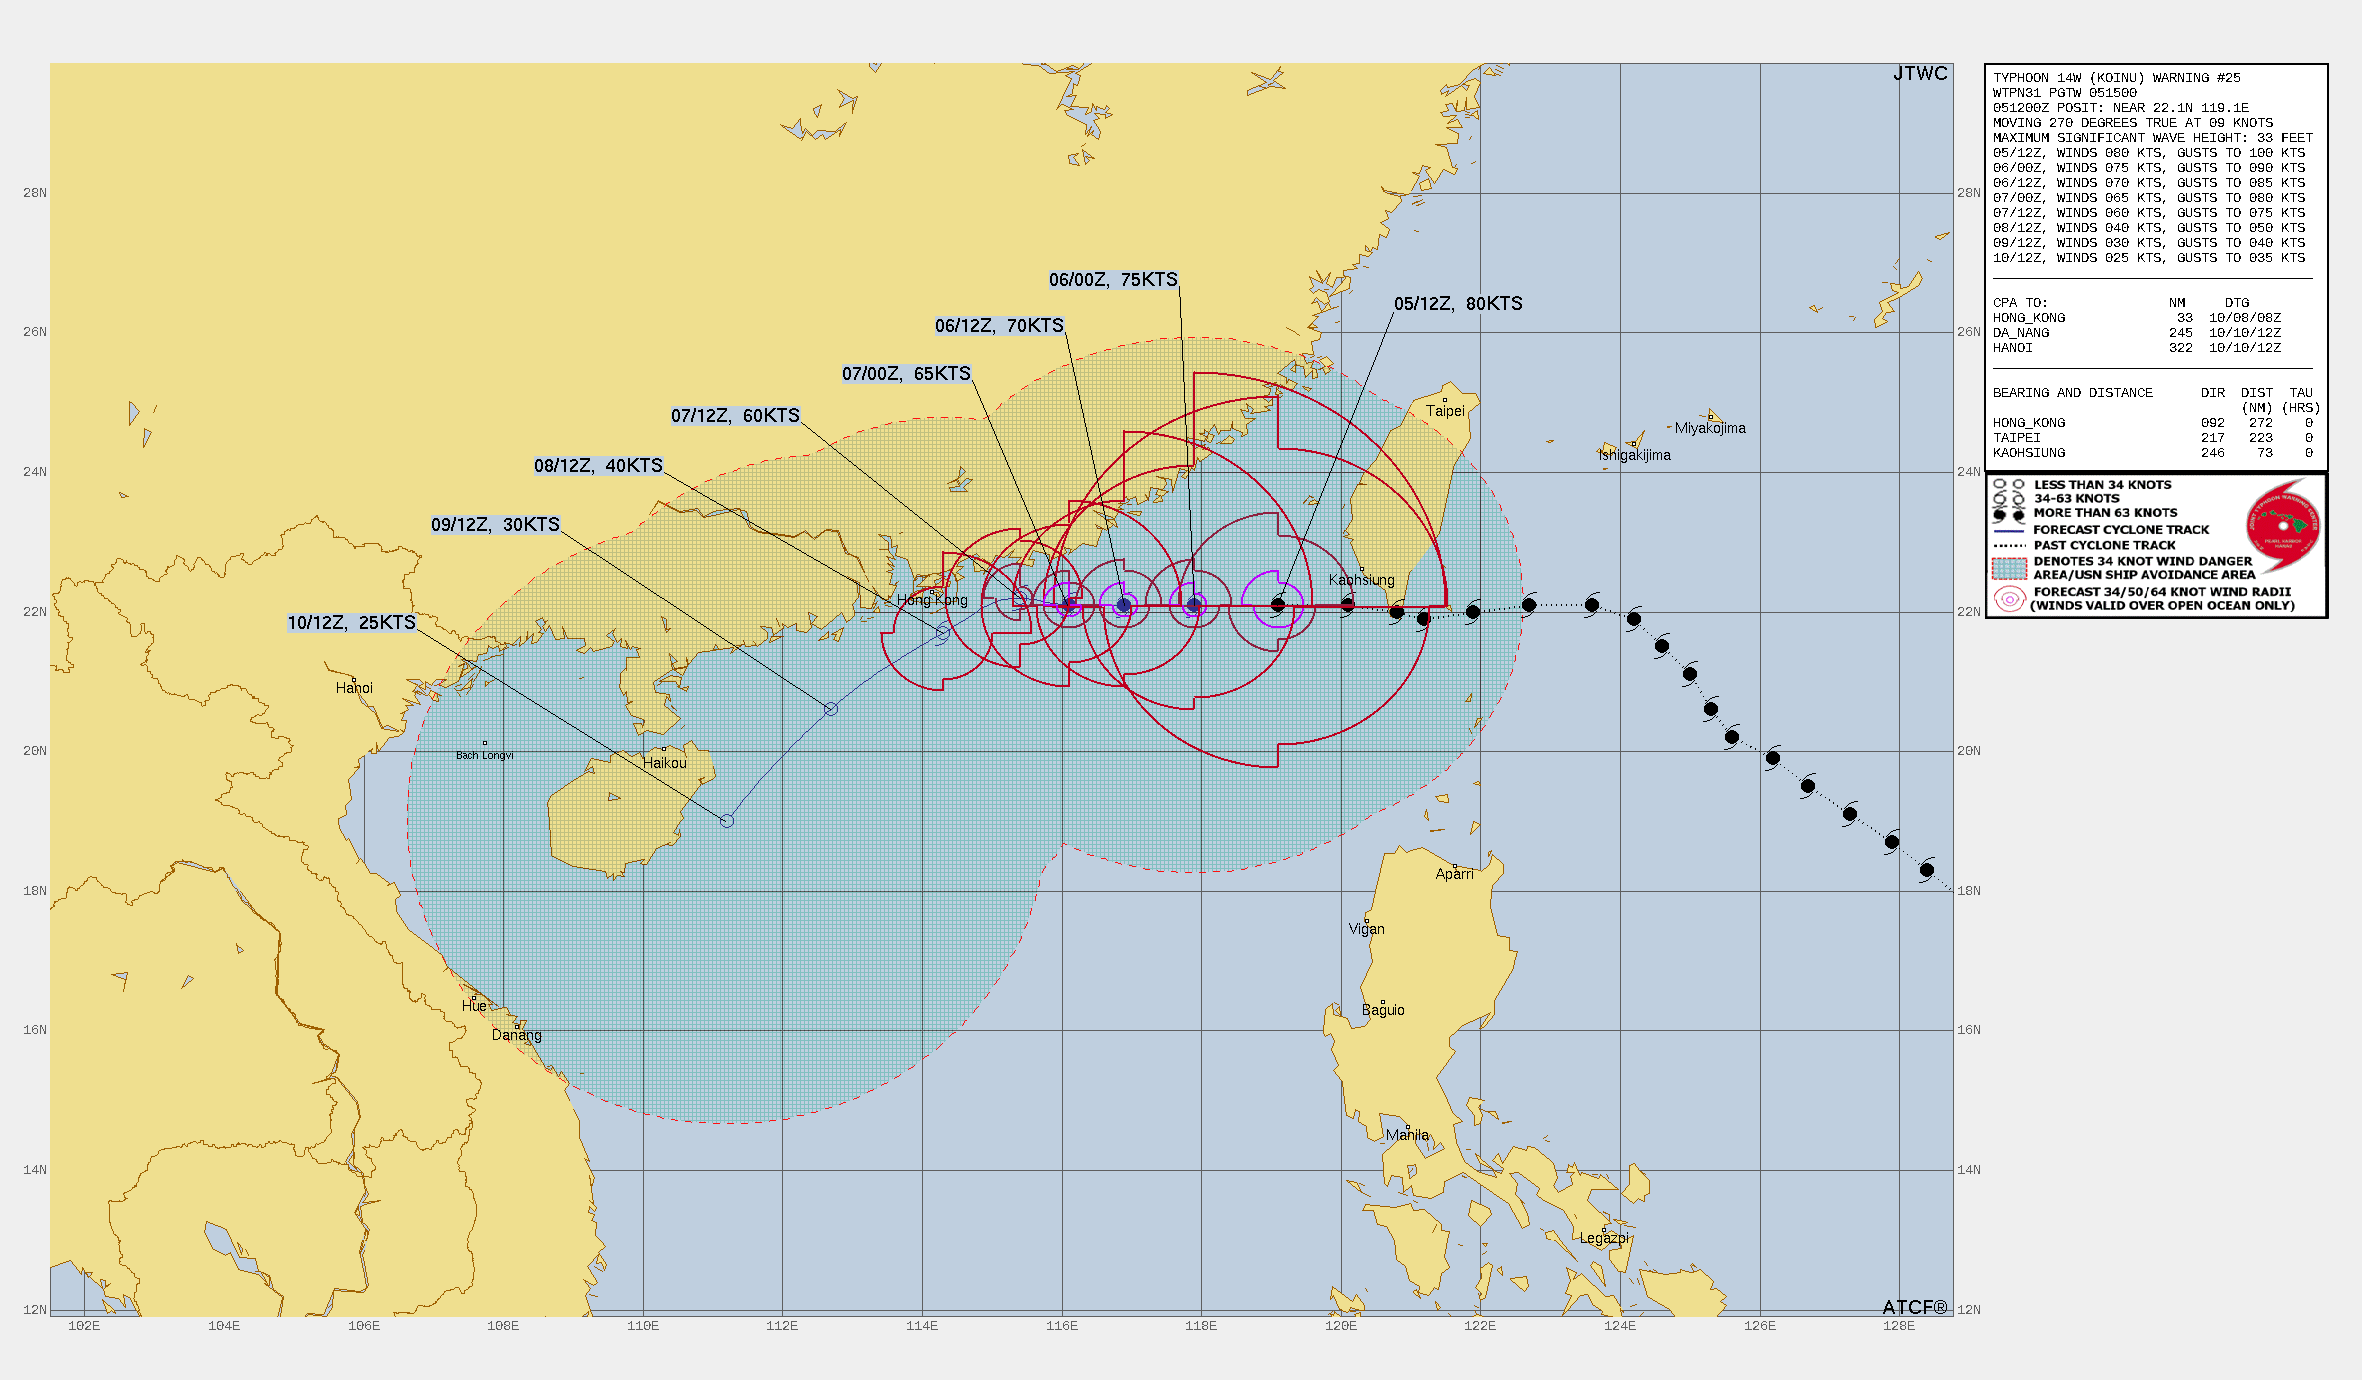 Taiwan Typhoon Koinu forecast track and intensity